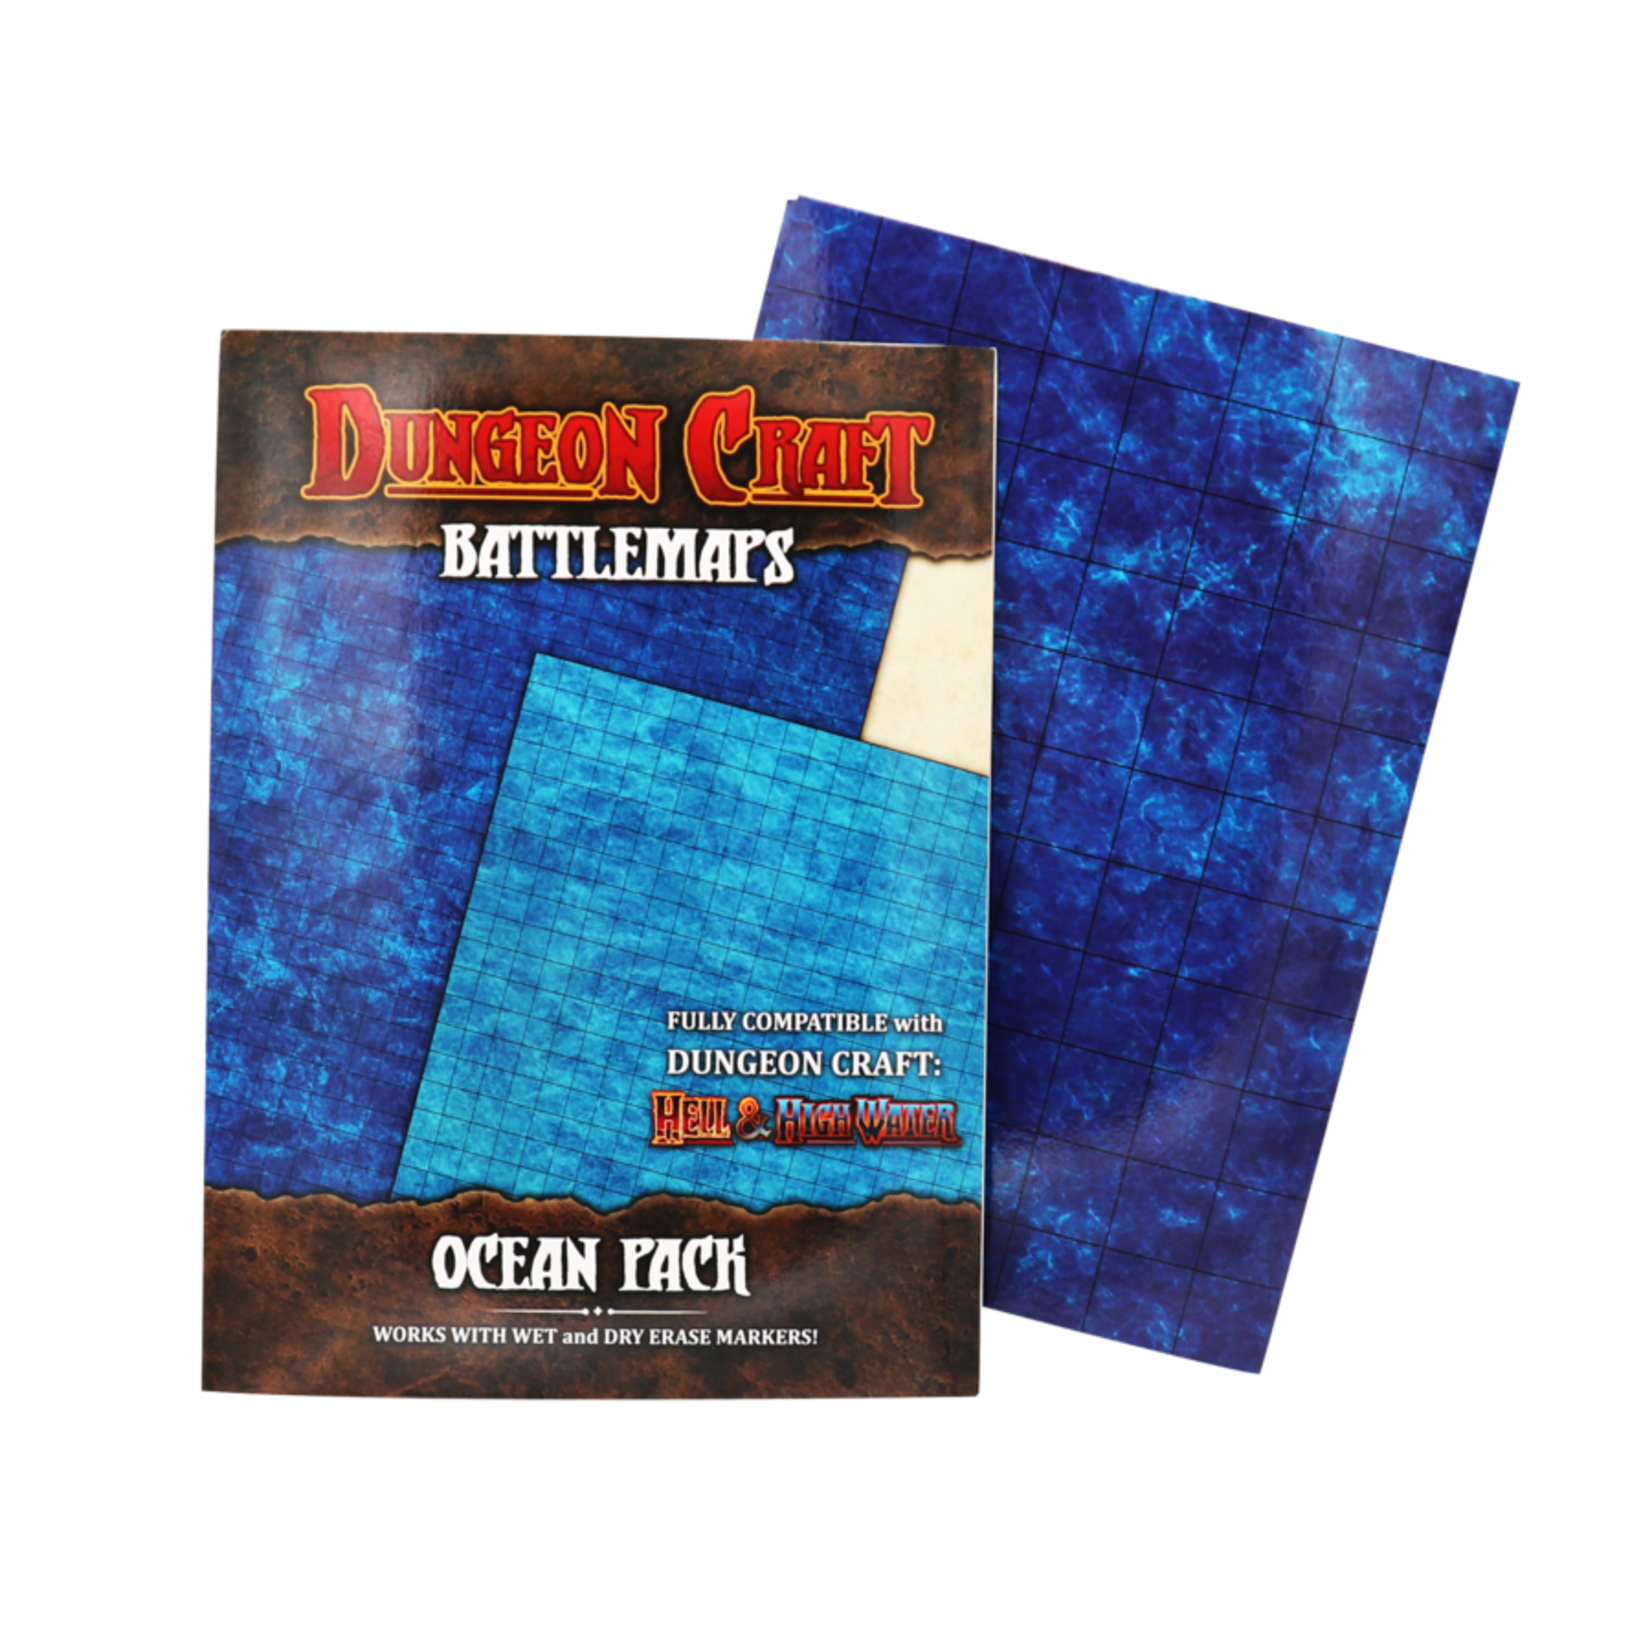 1985 Games Dungeon Craft Battle Maps Ocean Pack